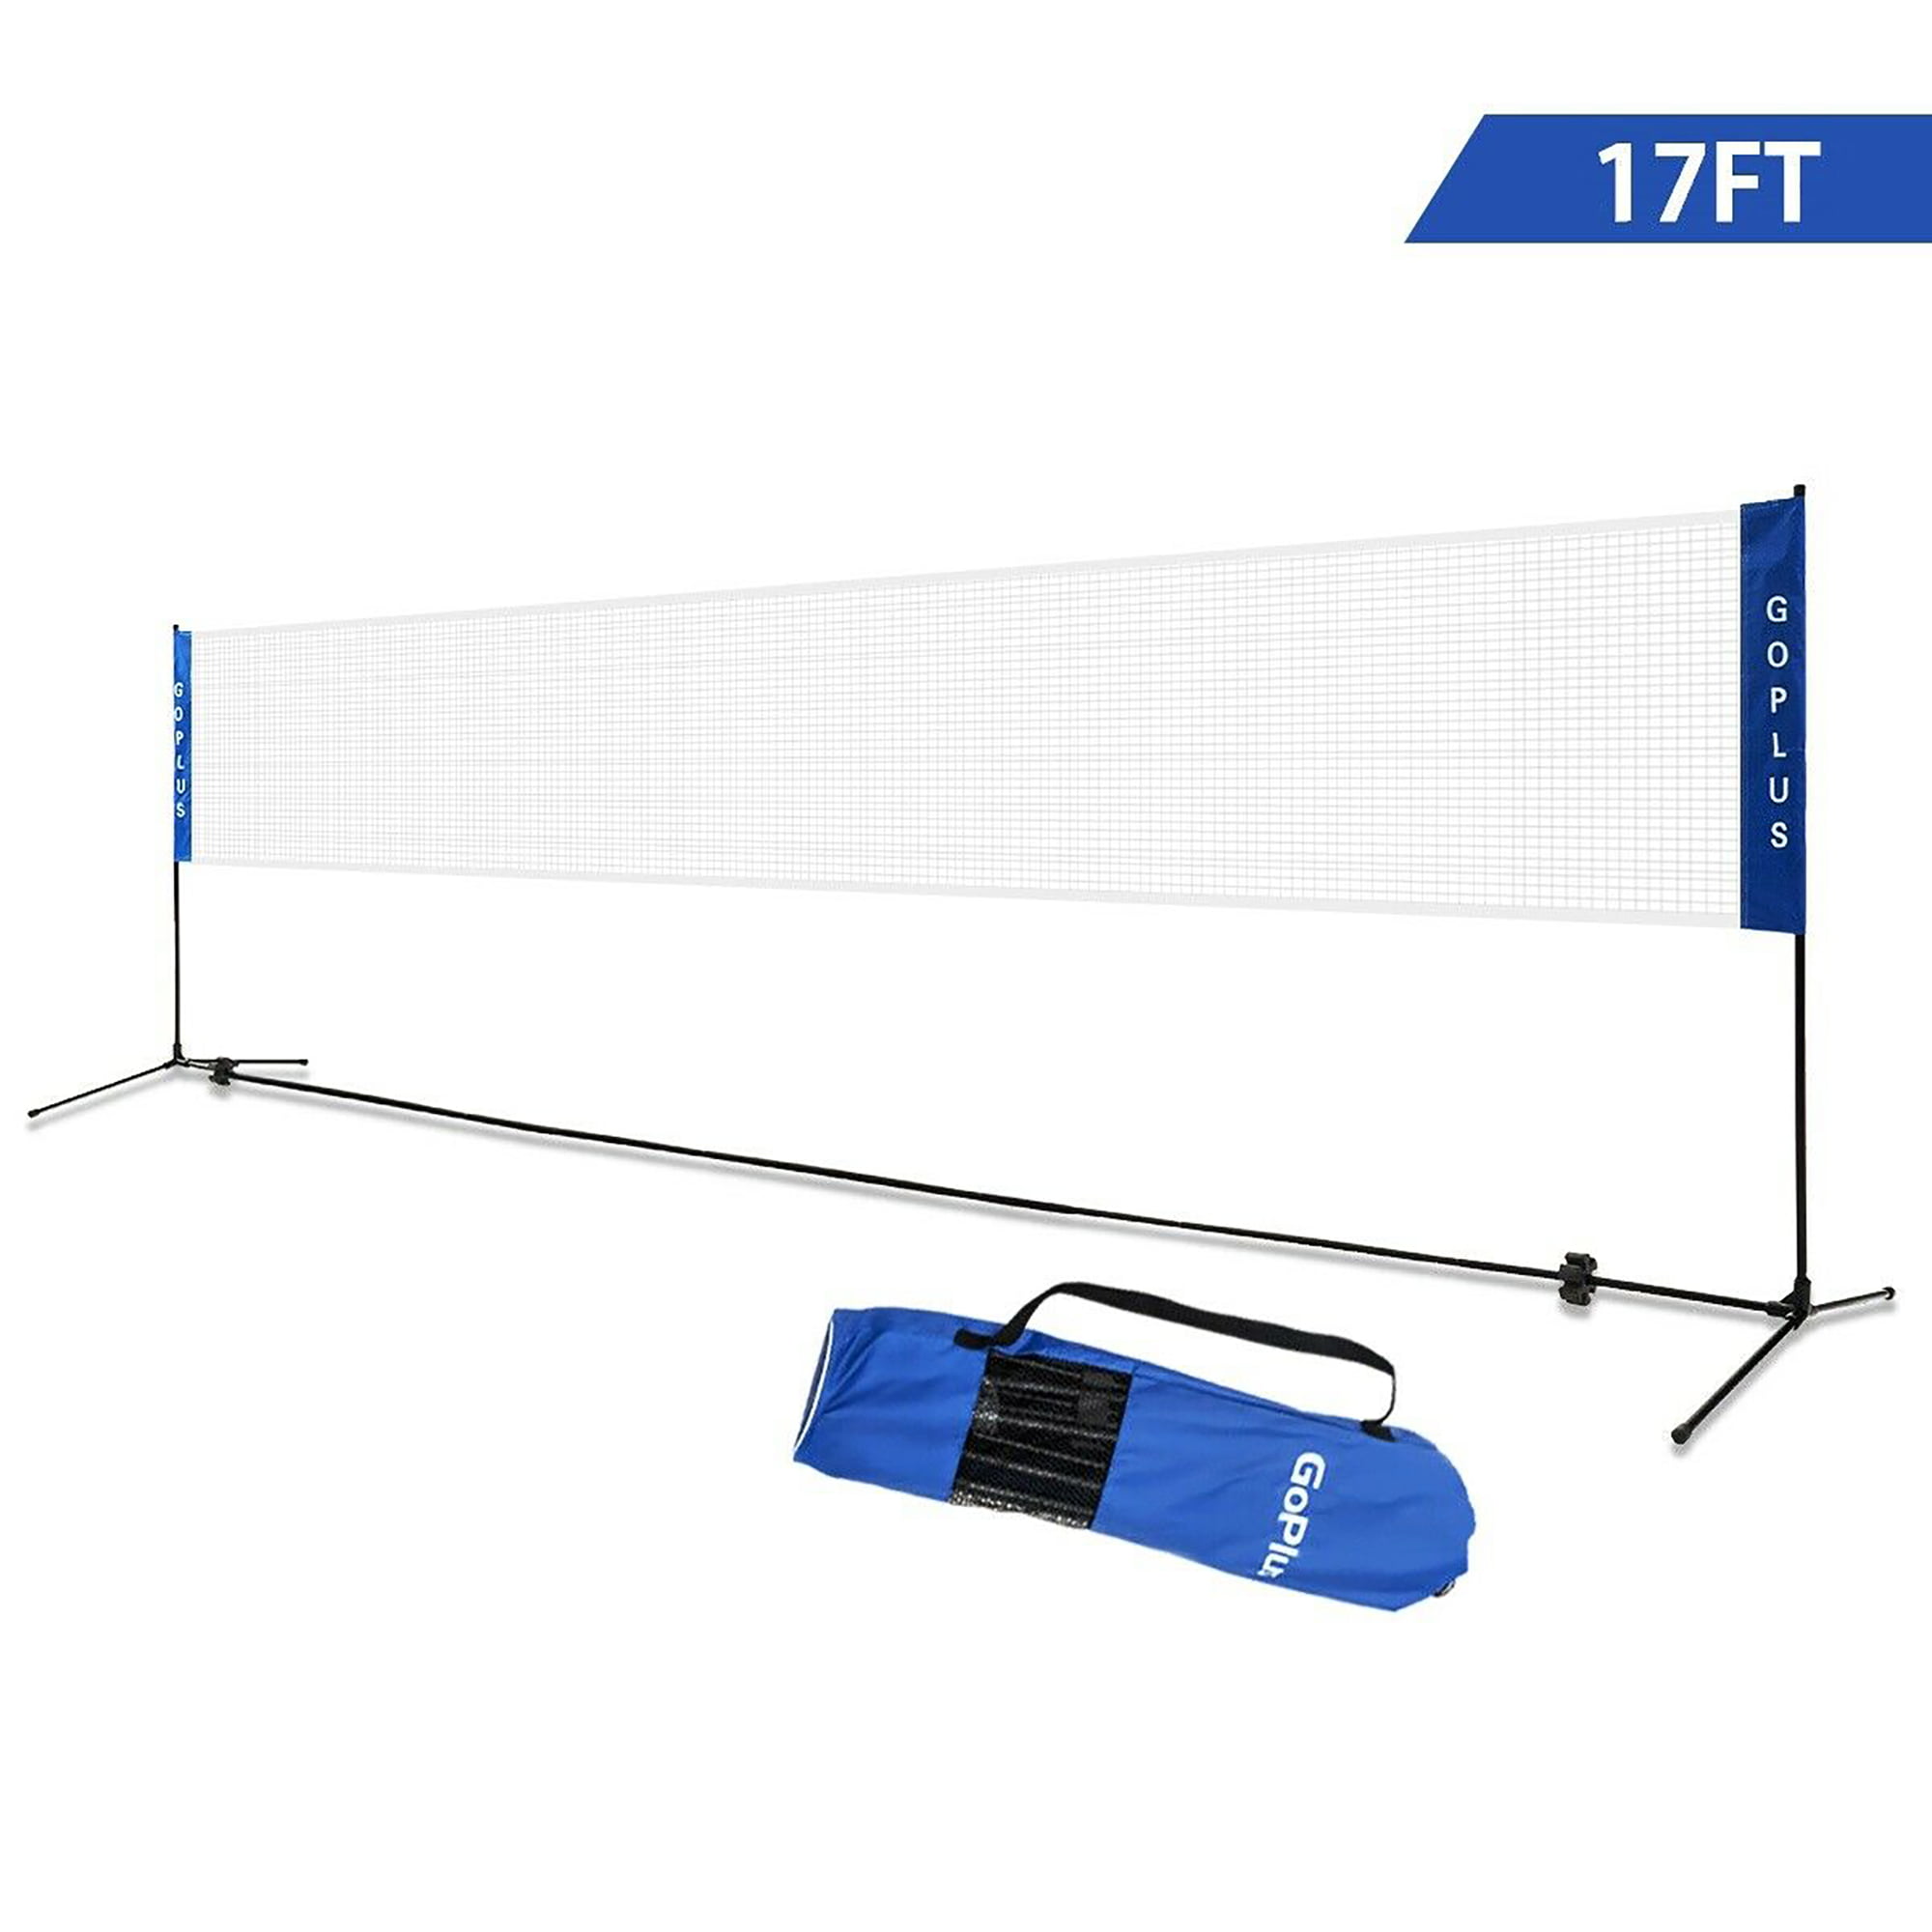 Portable Outdoor Foldable Badminton Tennis Volleyball Net Beach Sport NEW 